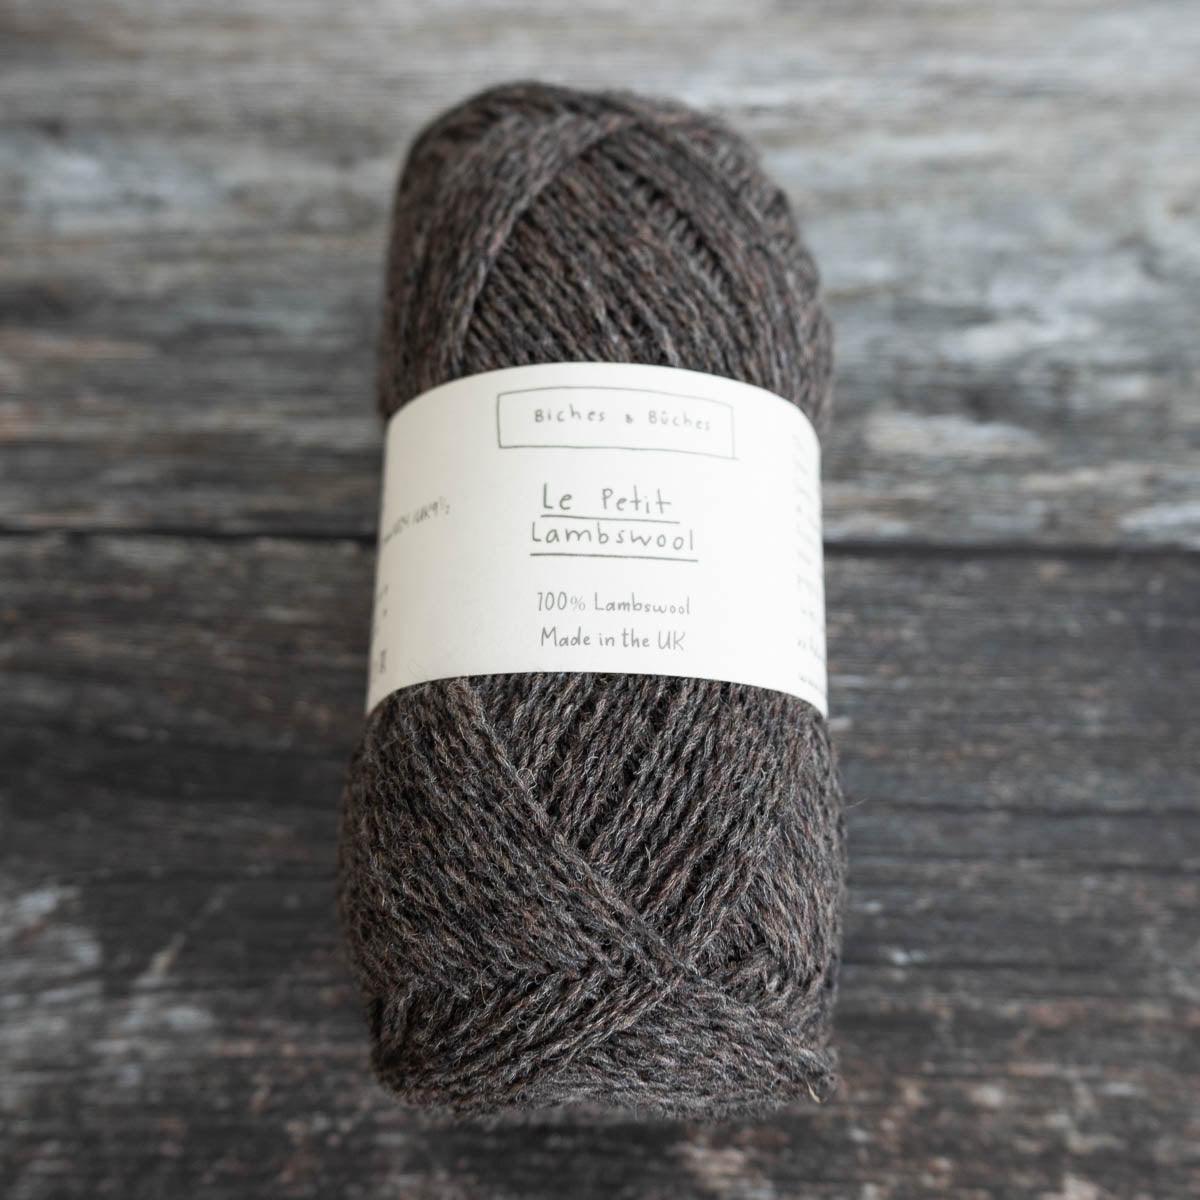 Biches & Bûches Biches & Bûches Le Petit Lambswool - Medium Grey Brown - 4ply Knitting Yarn